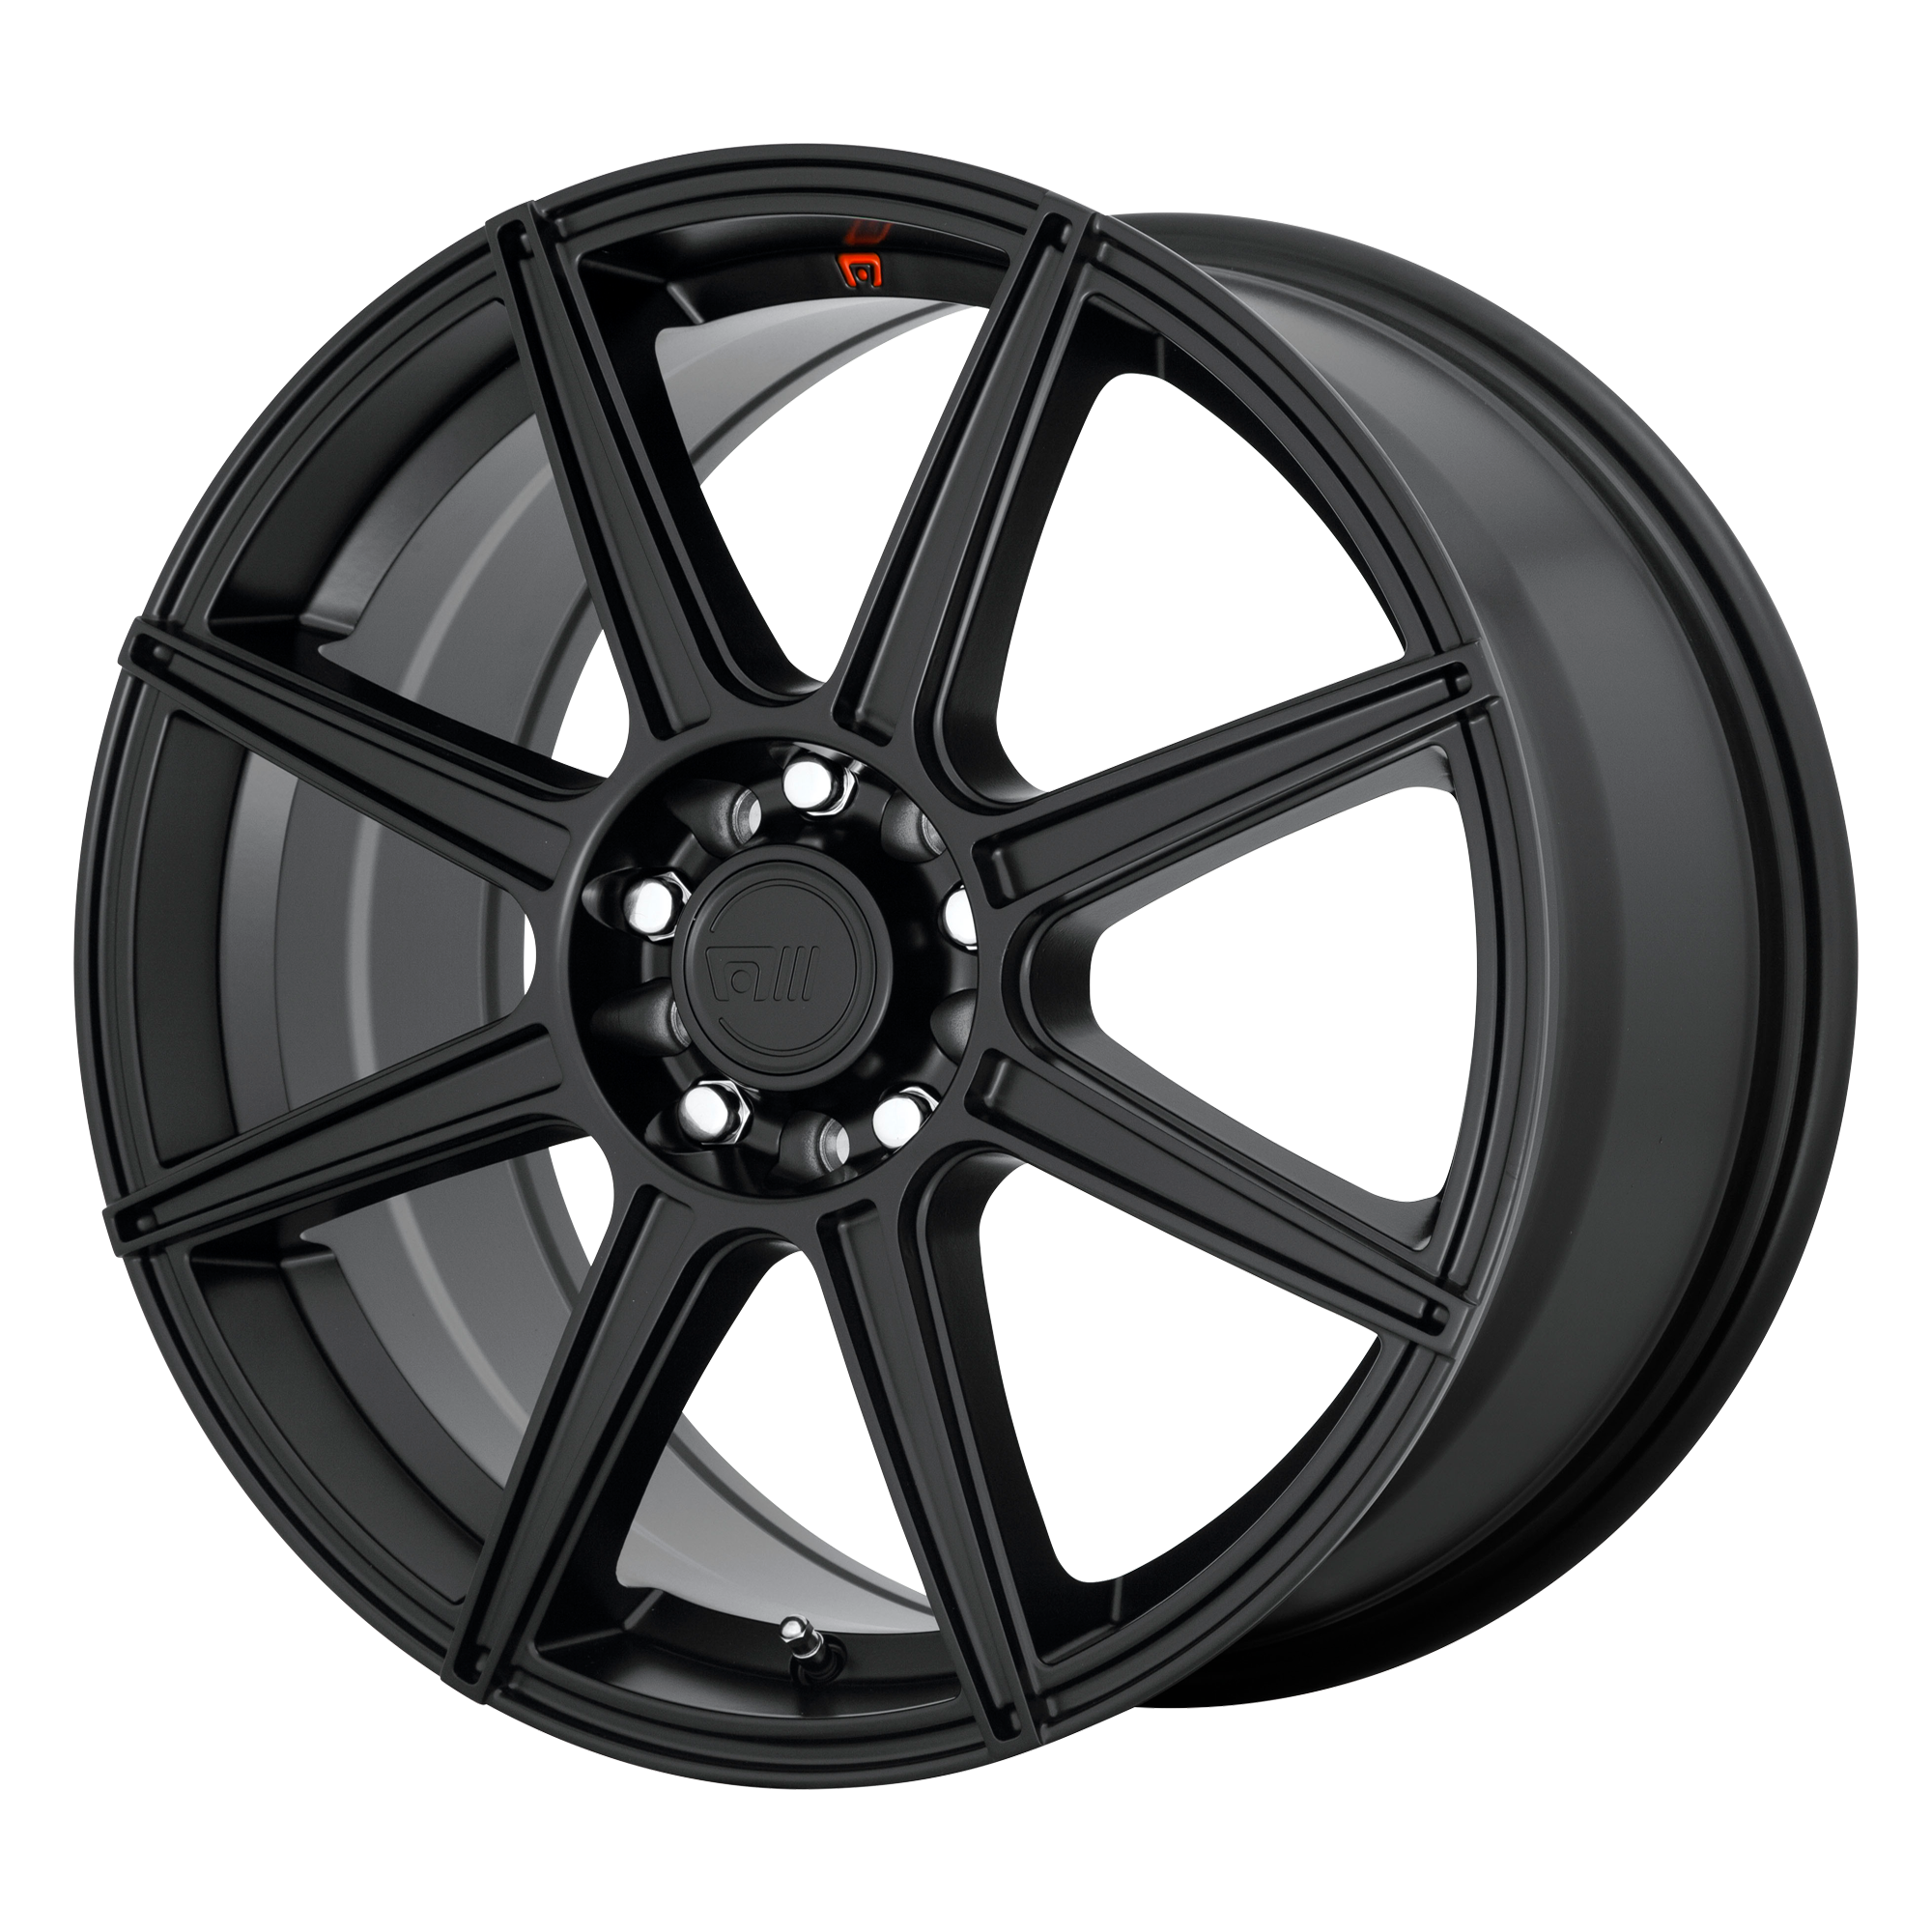 CS8 15x6.5 4x100.00/4x114.30 SATIN BLACK (40 mm) - Tires and Engine Performance